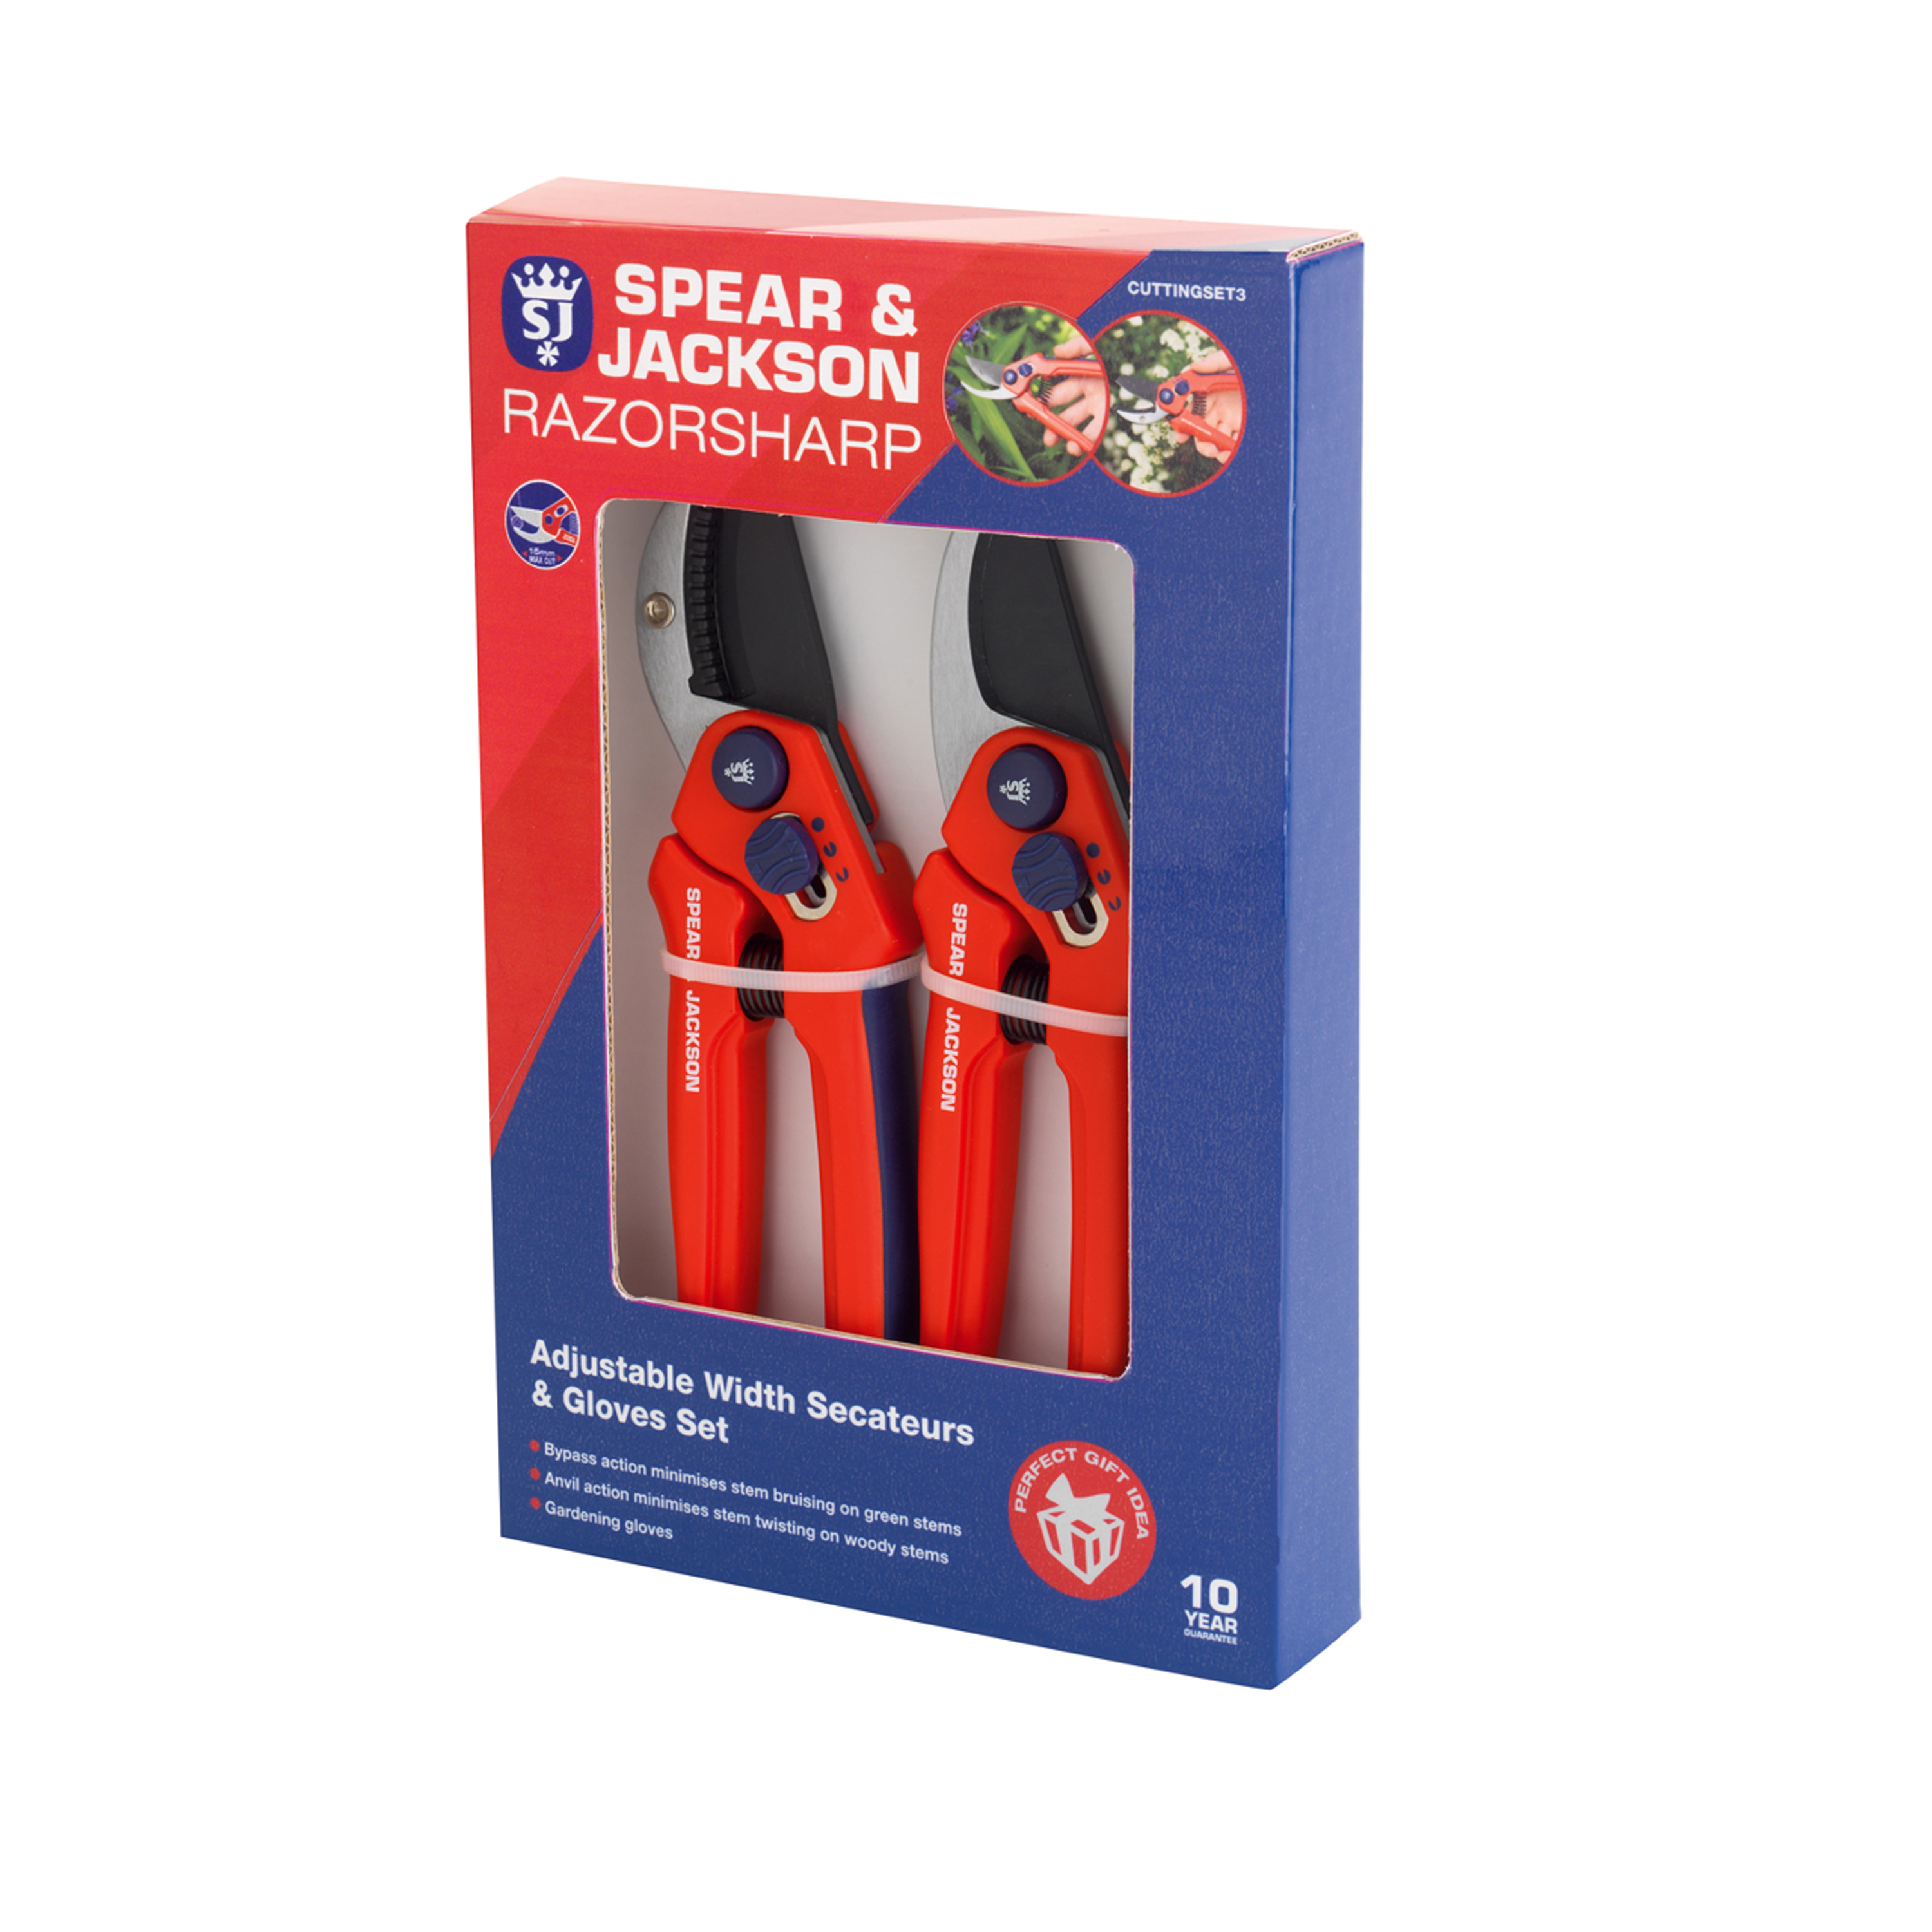 Spear and jackson gardener's gift set wishbone shears/twin set secateurs 